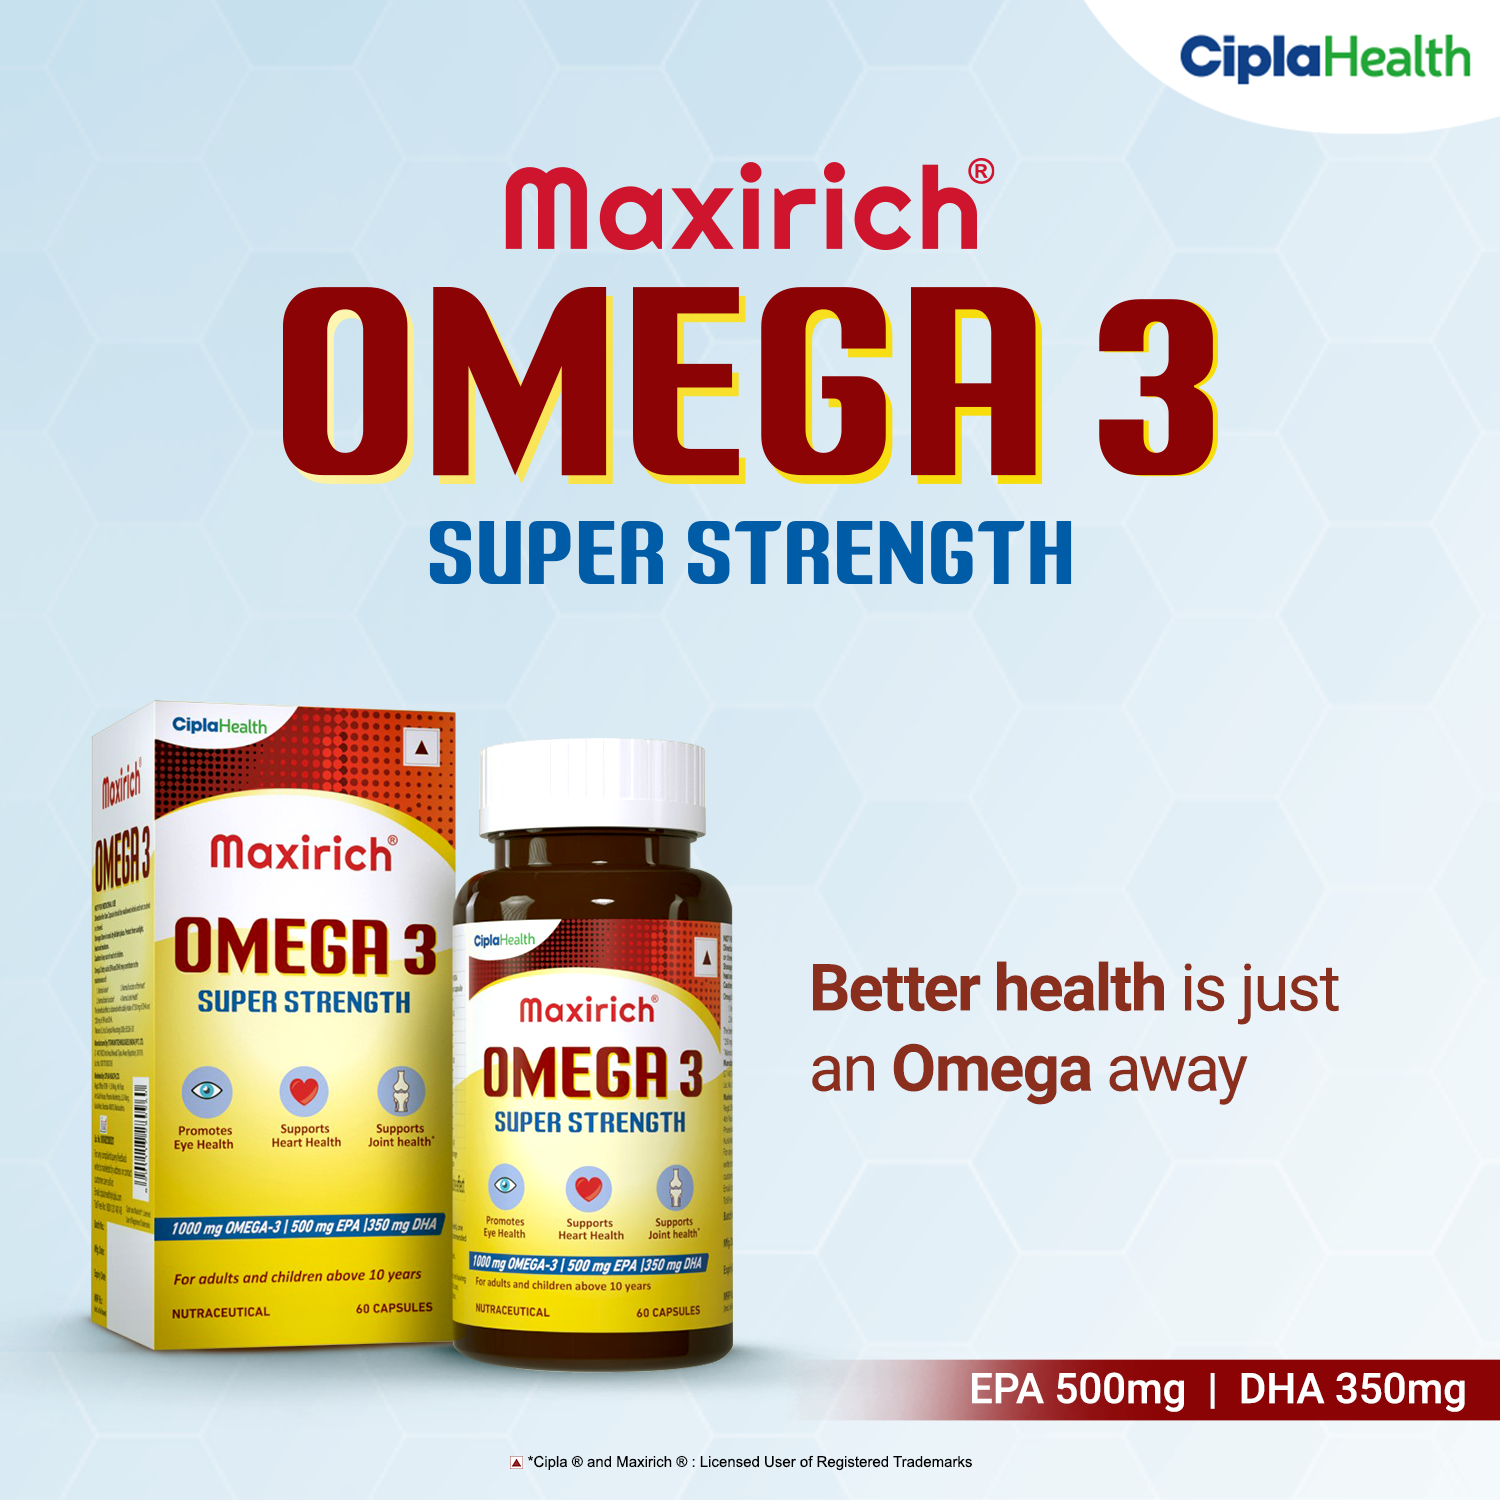 Maxirich Omega 3 Super Strength